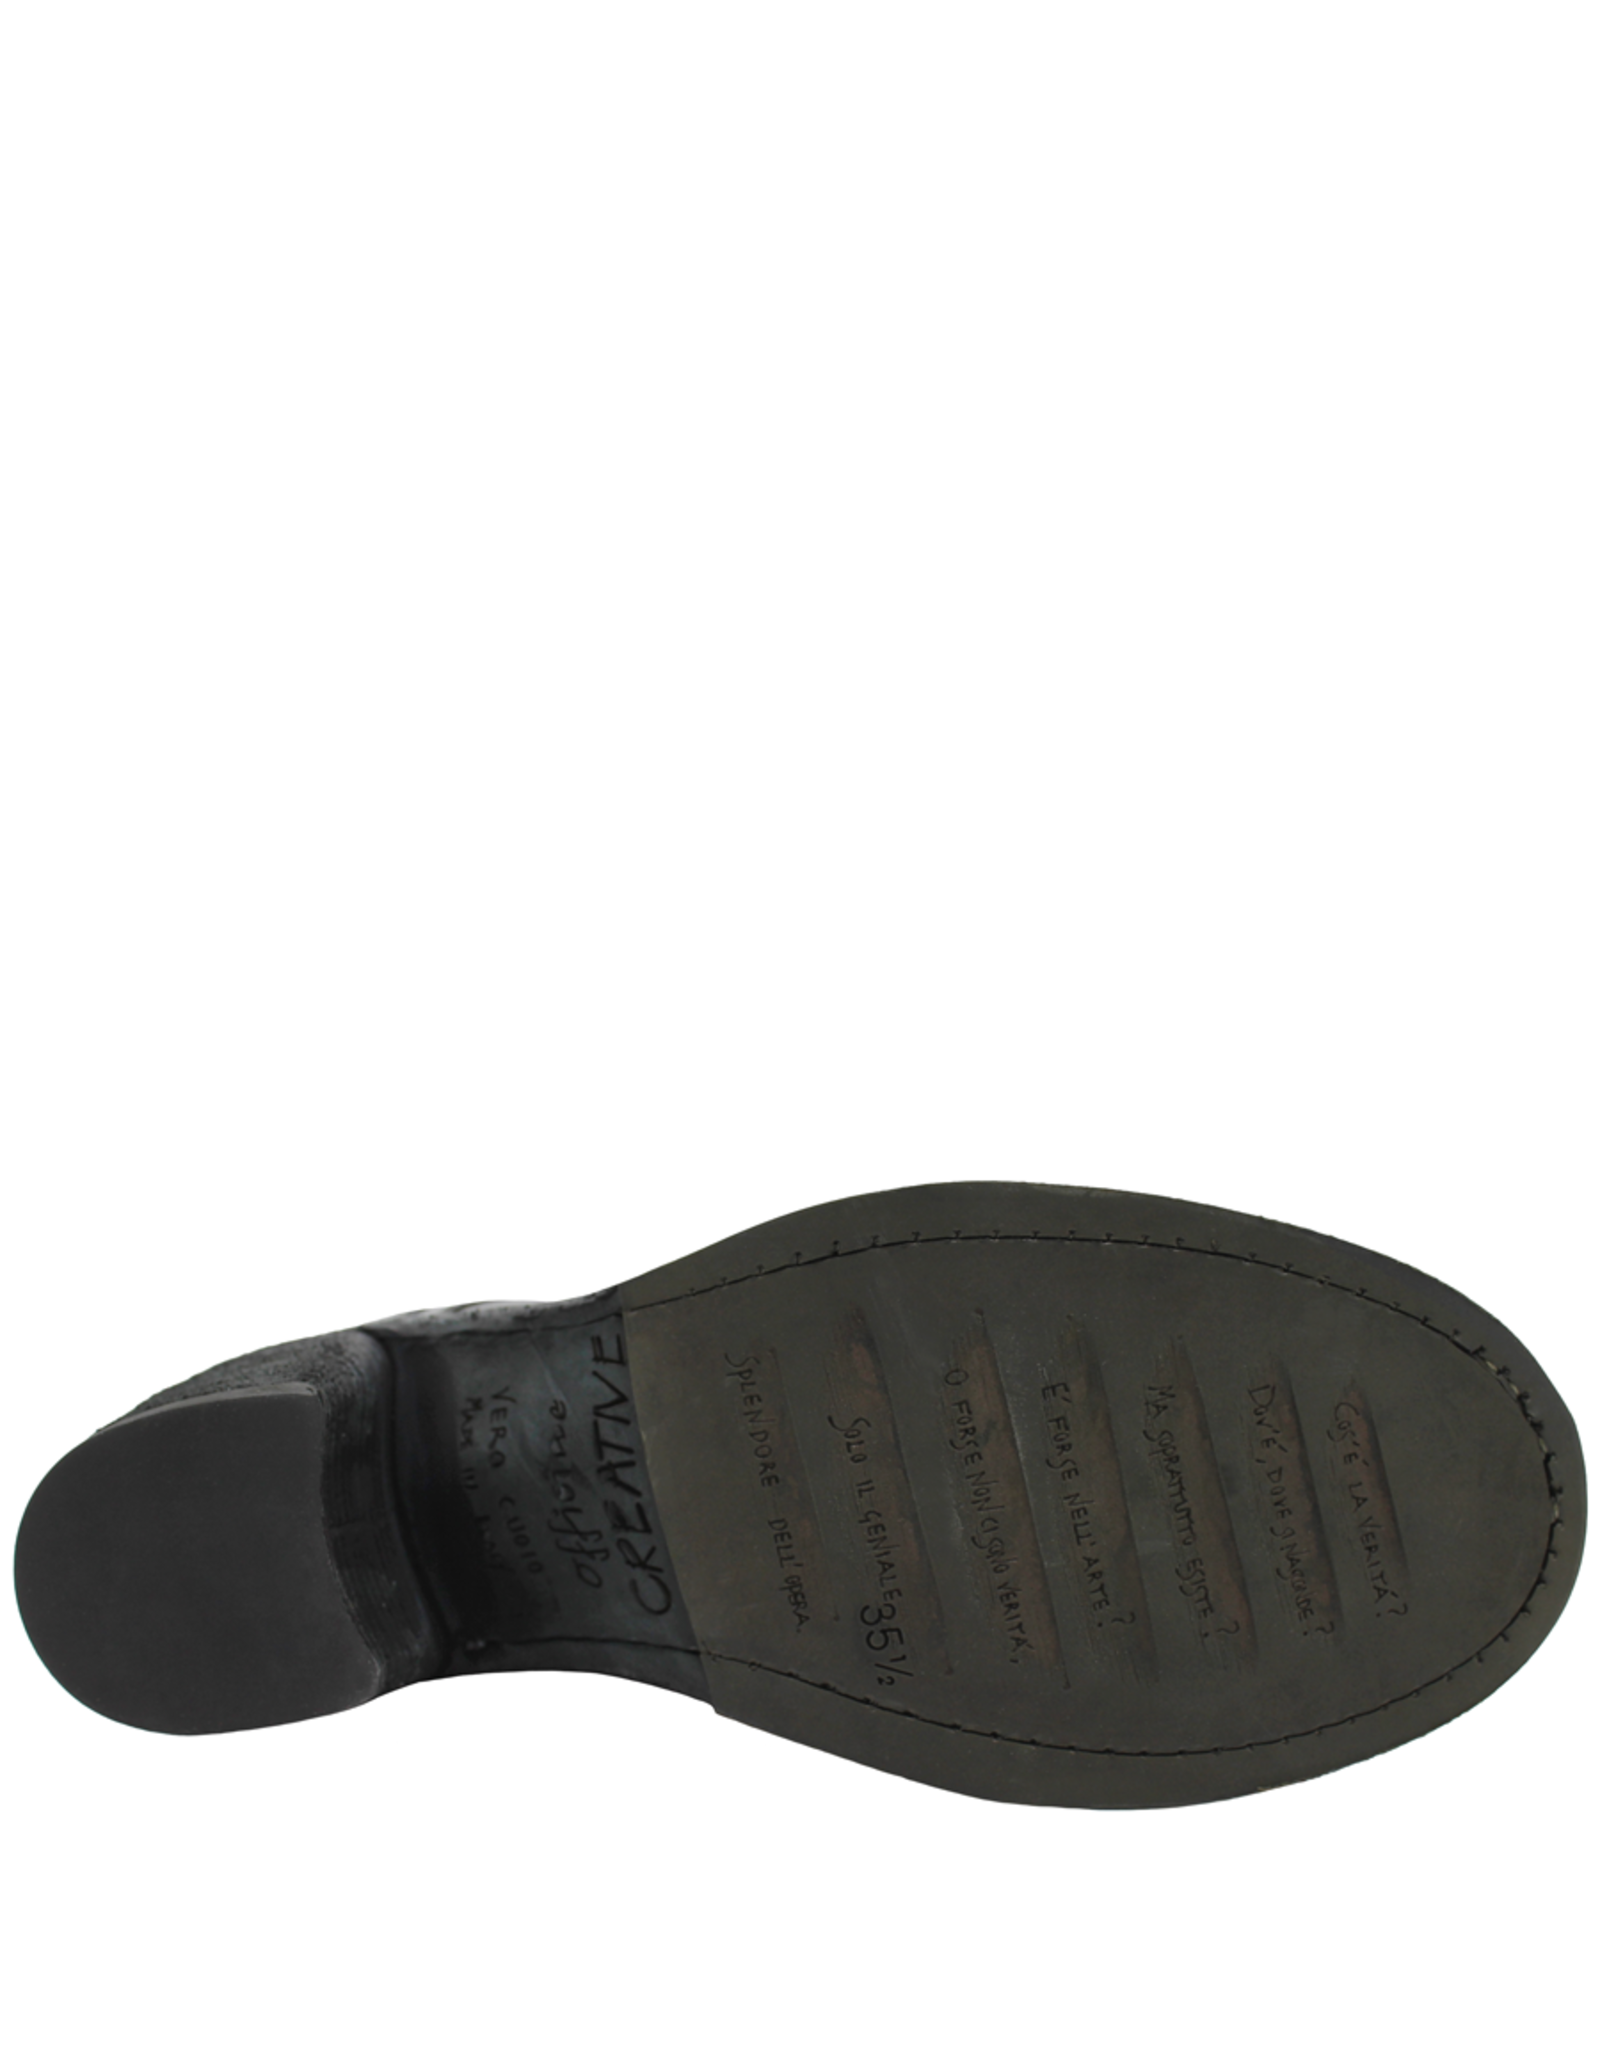 Officine Creative OfficineCreative Black Lace-Up Ankle Boot W/Zipper Agnes